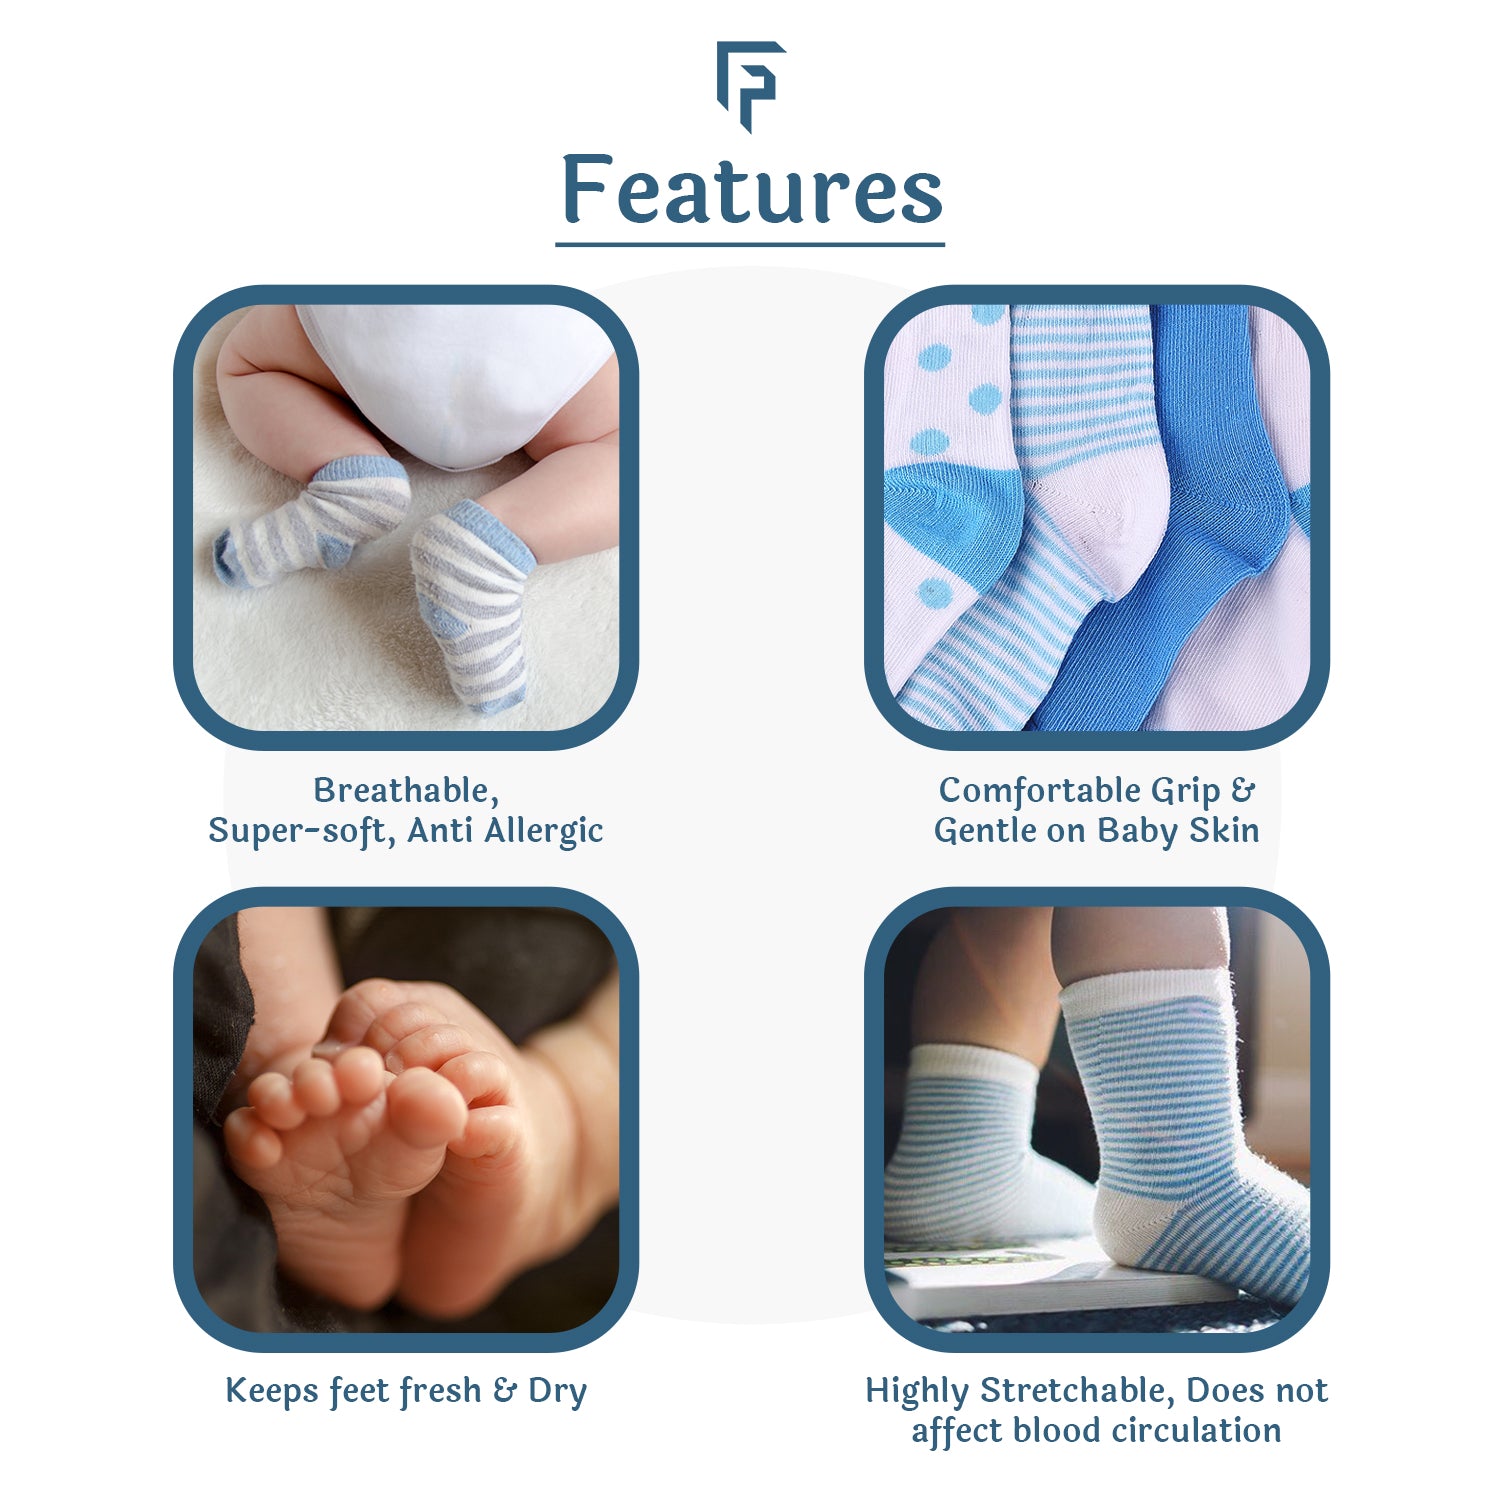 Footprints Super Soft Organic Cotton Kids  Socks | Red Baseball & Big Dot | 12-24 Months | Pack of 6